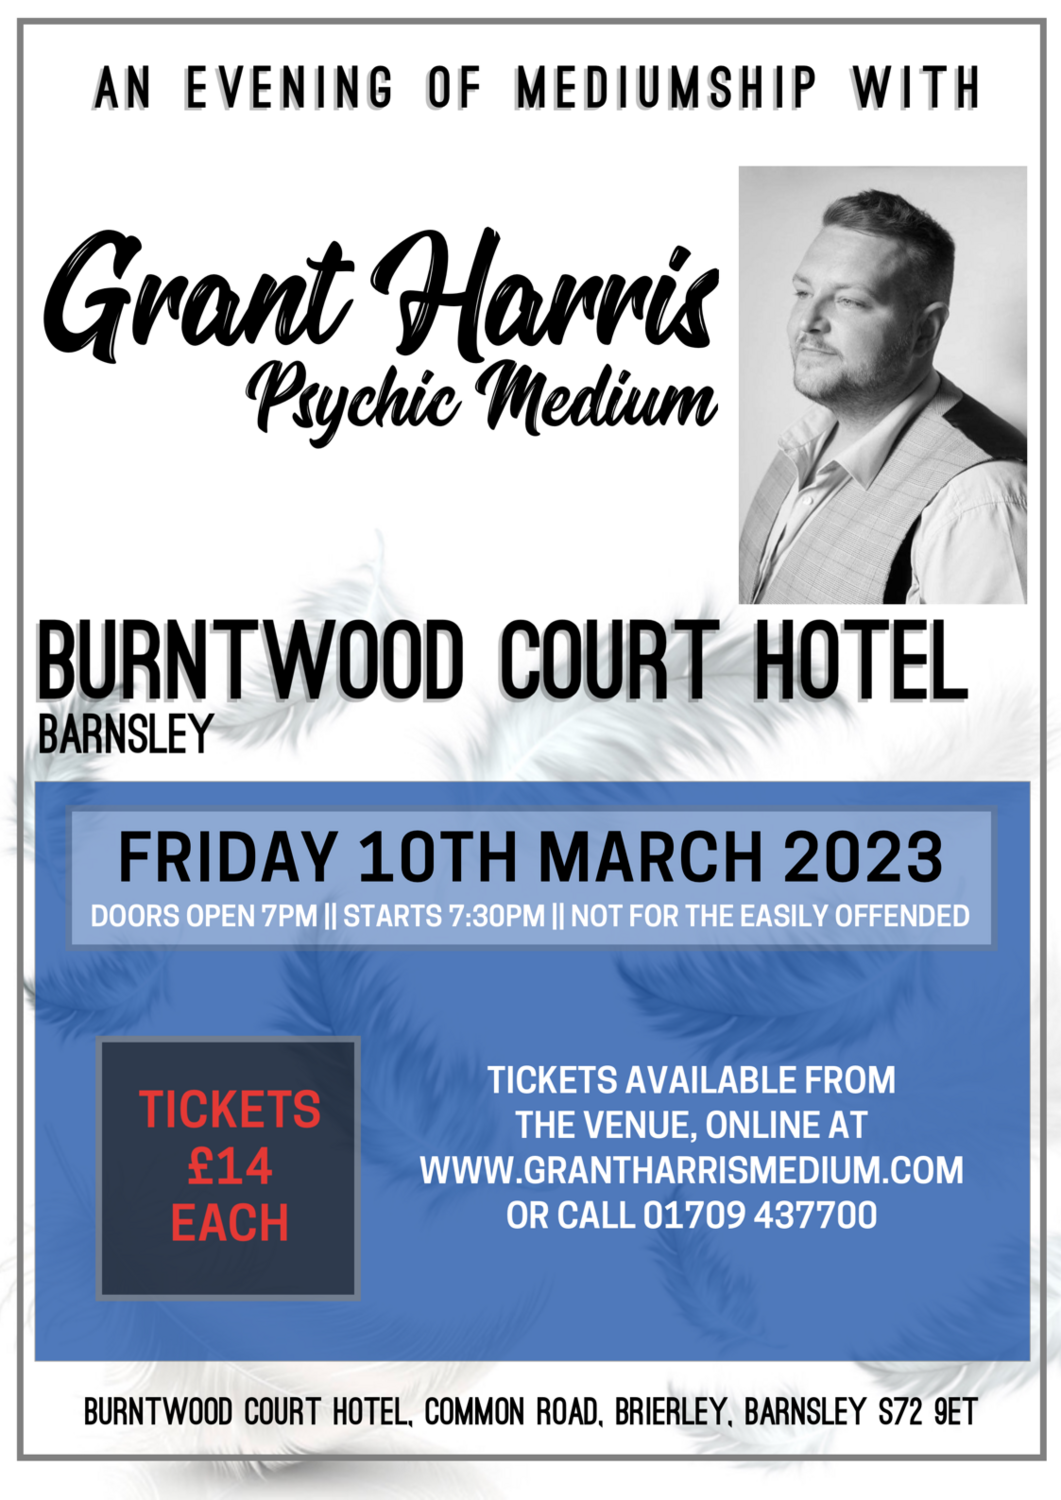 Burntwood Court Hotel, Barnsley, Fri 10th March 2023